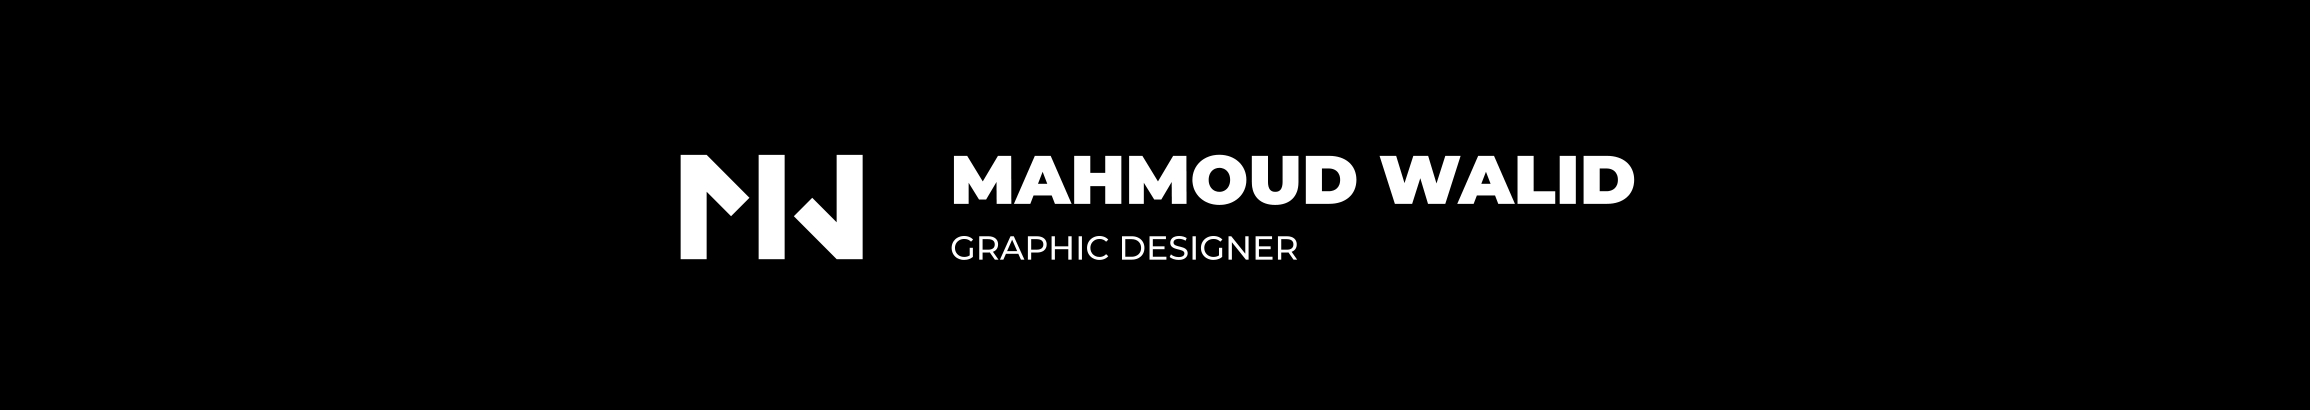 mahmoud walid's profile banner